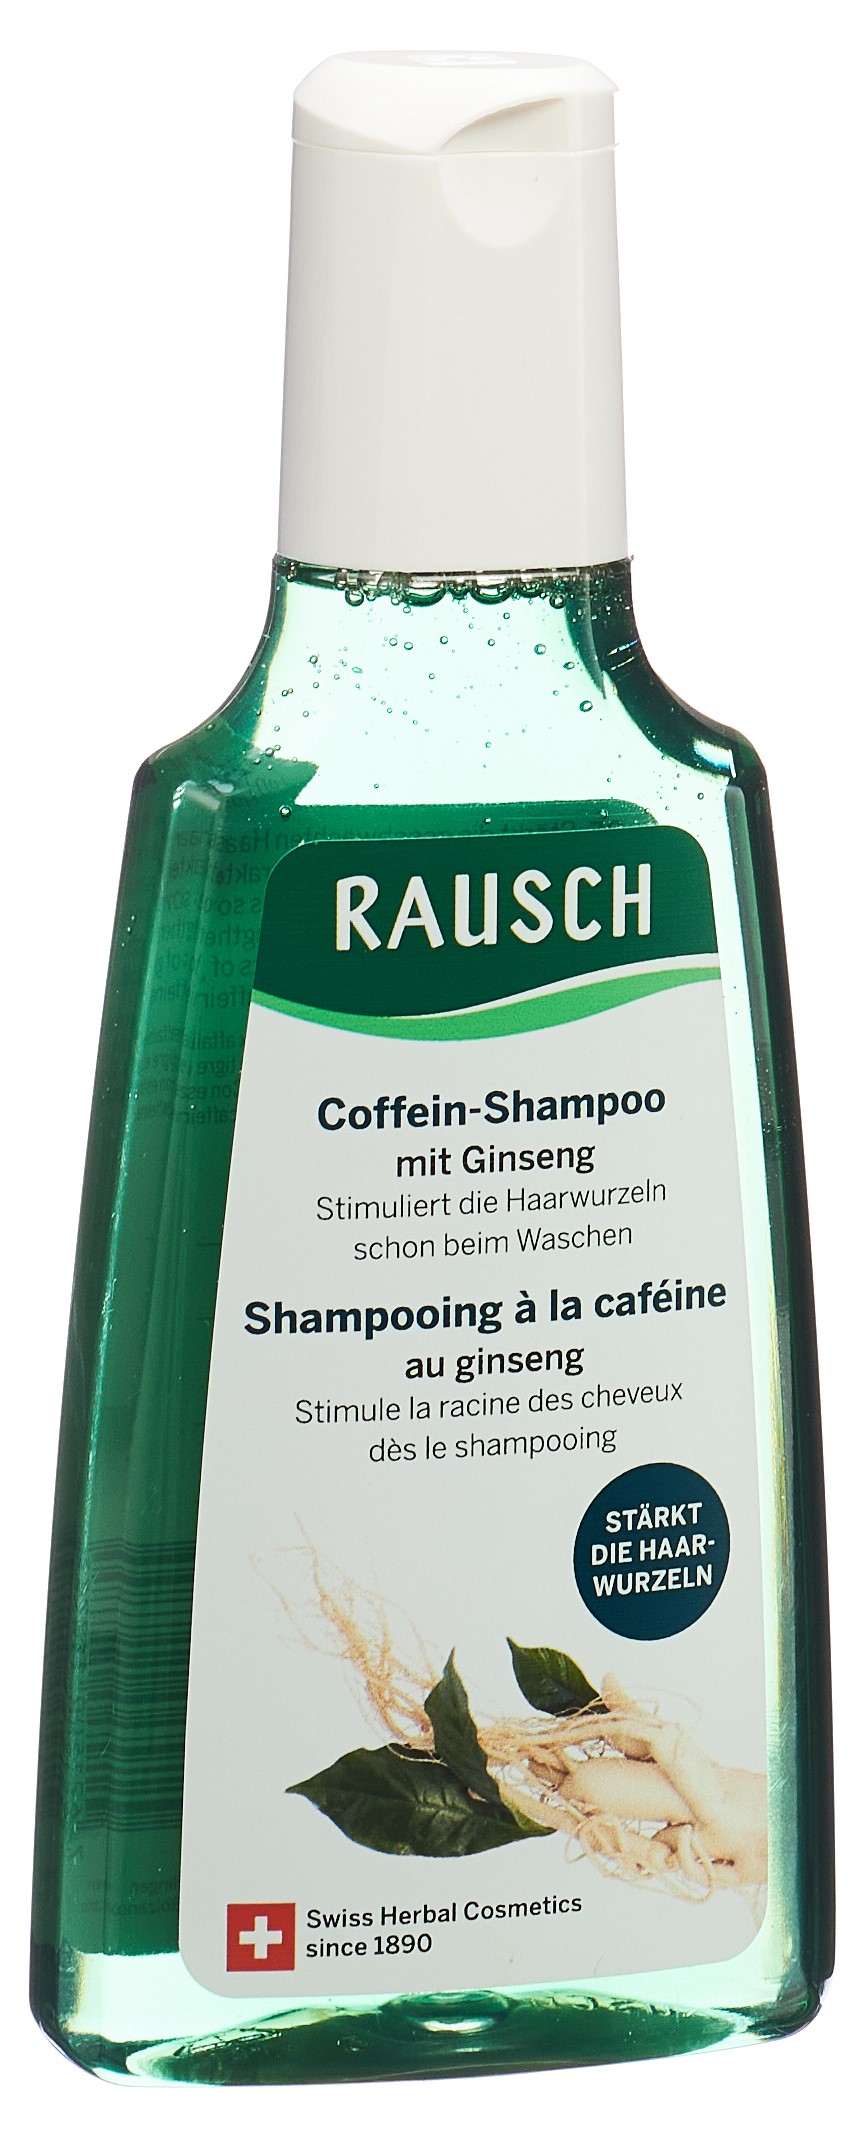 RAUSCH Coffein-Shampoo Ginseng 200 ml